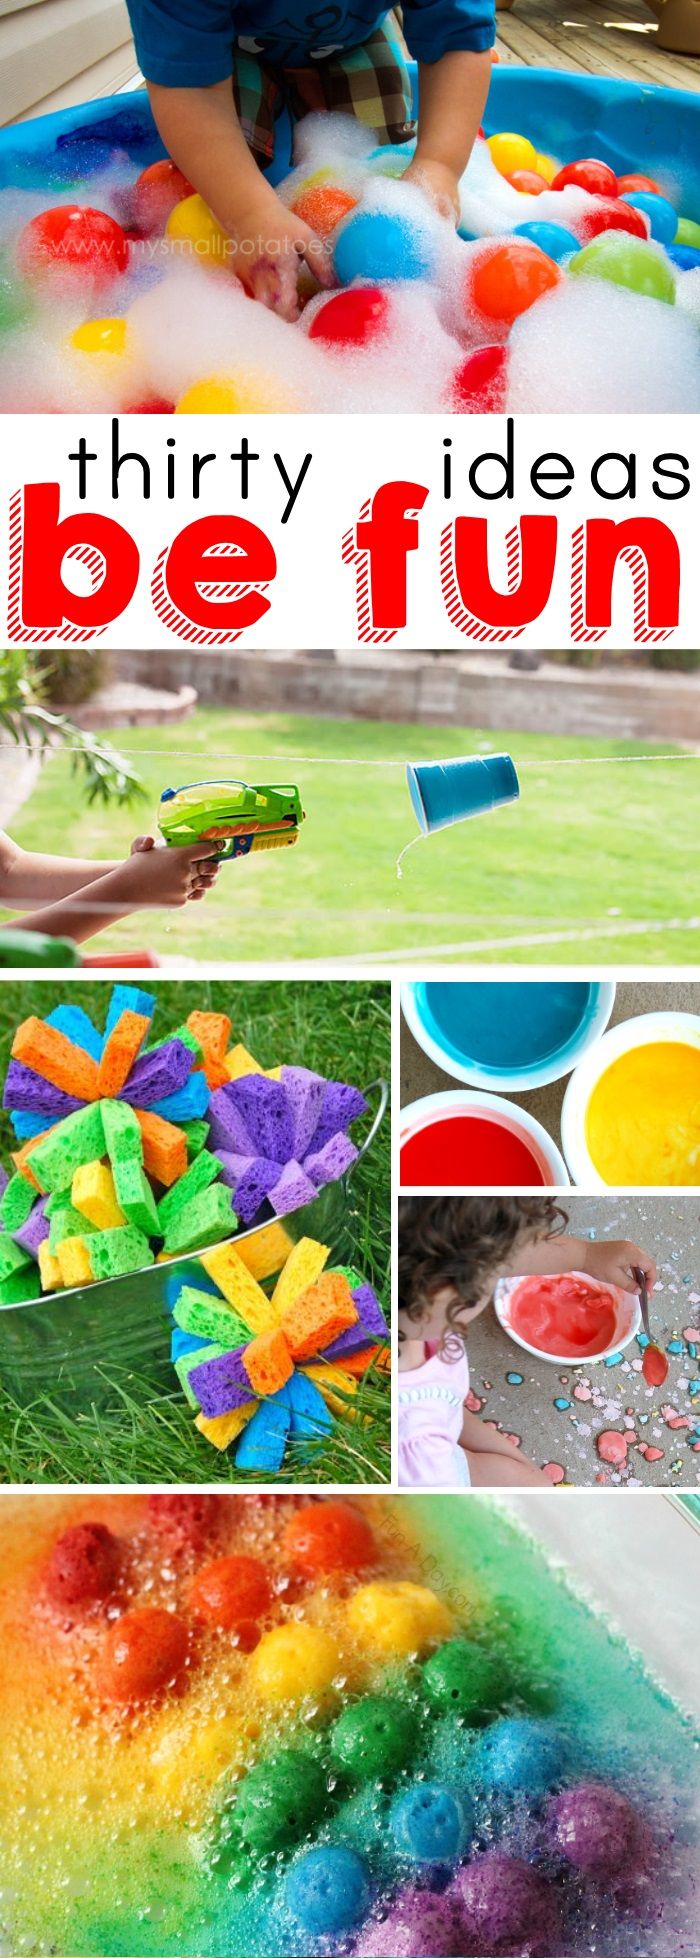 Summer Ideas To Keep The Kids Busy -   Kids Activities Ideas